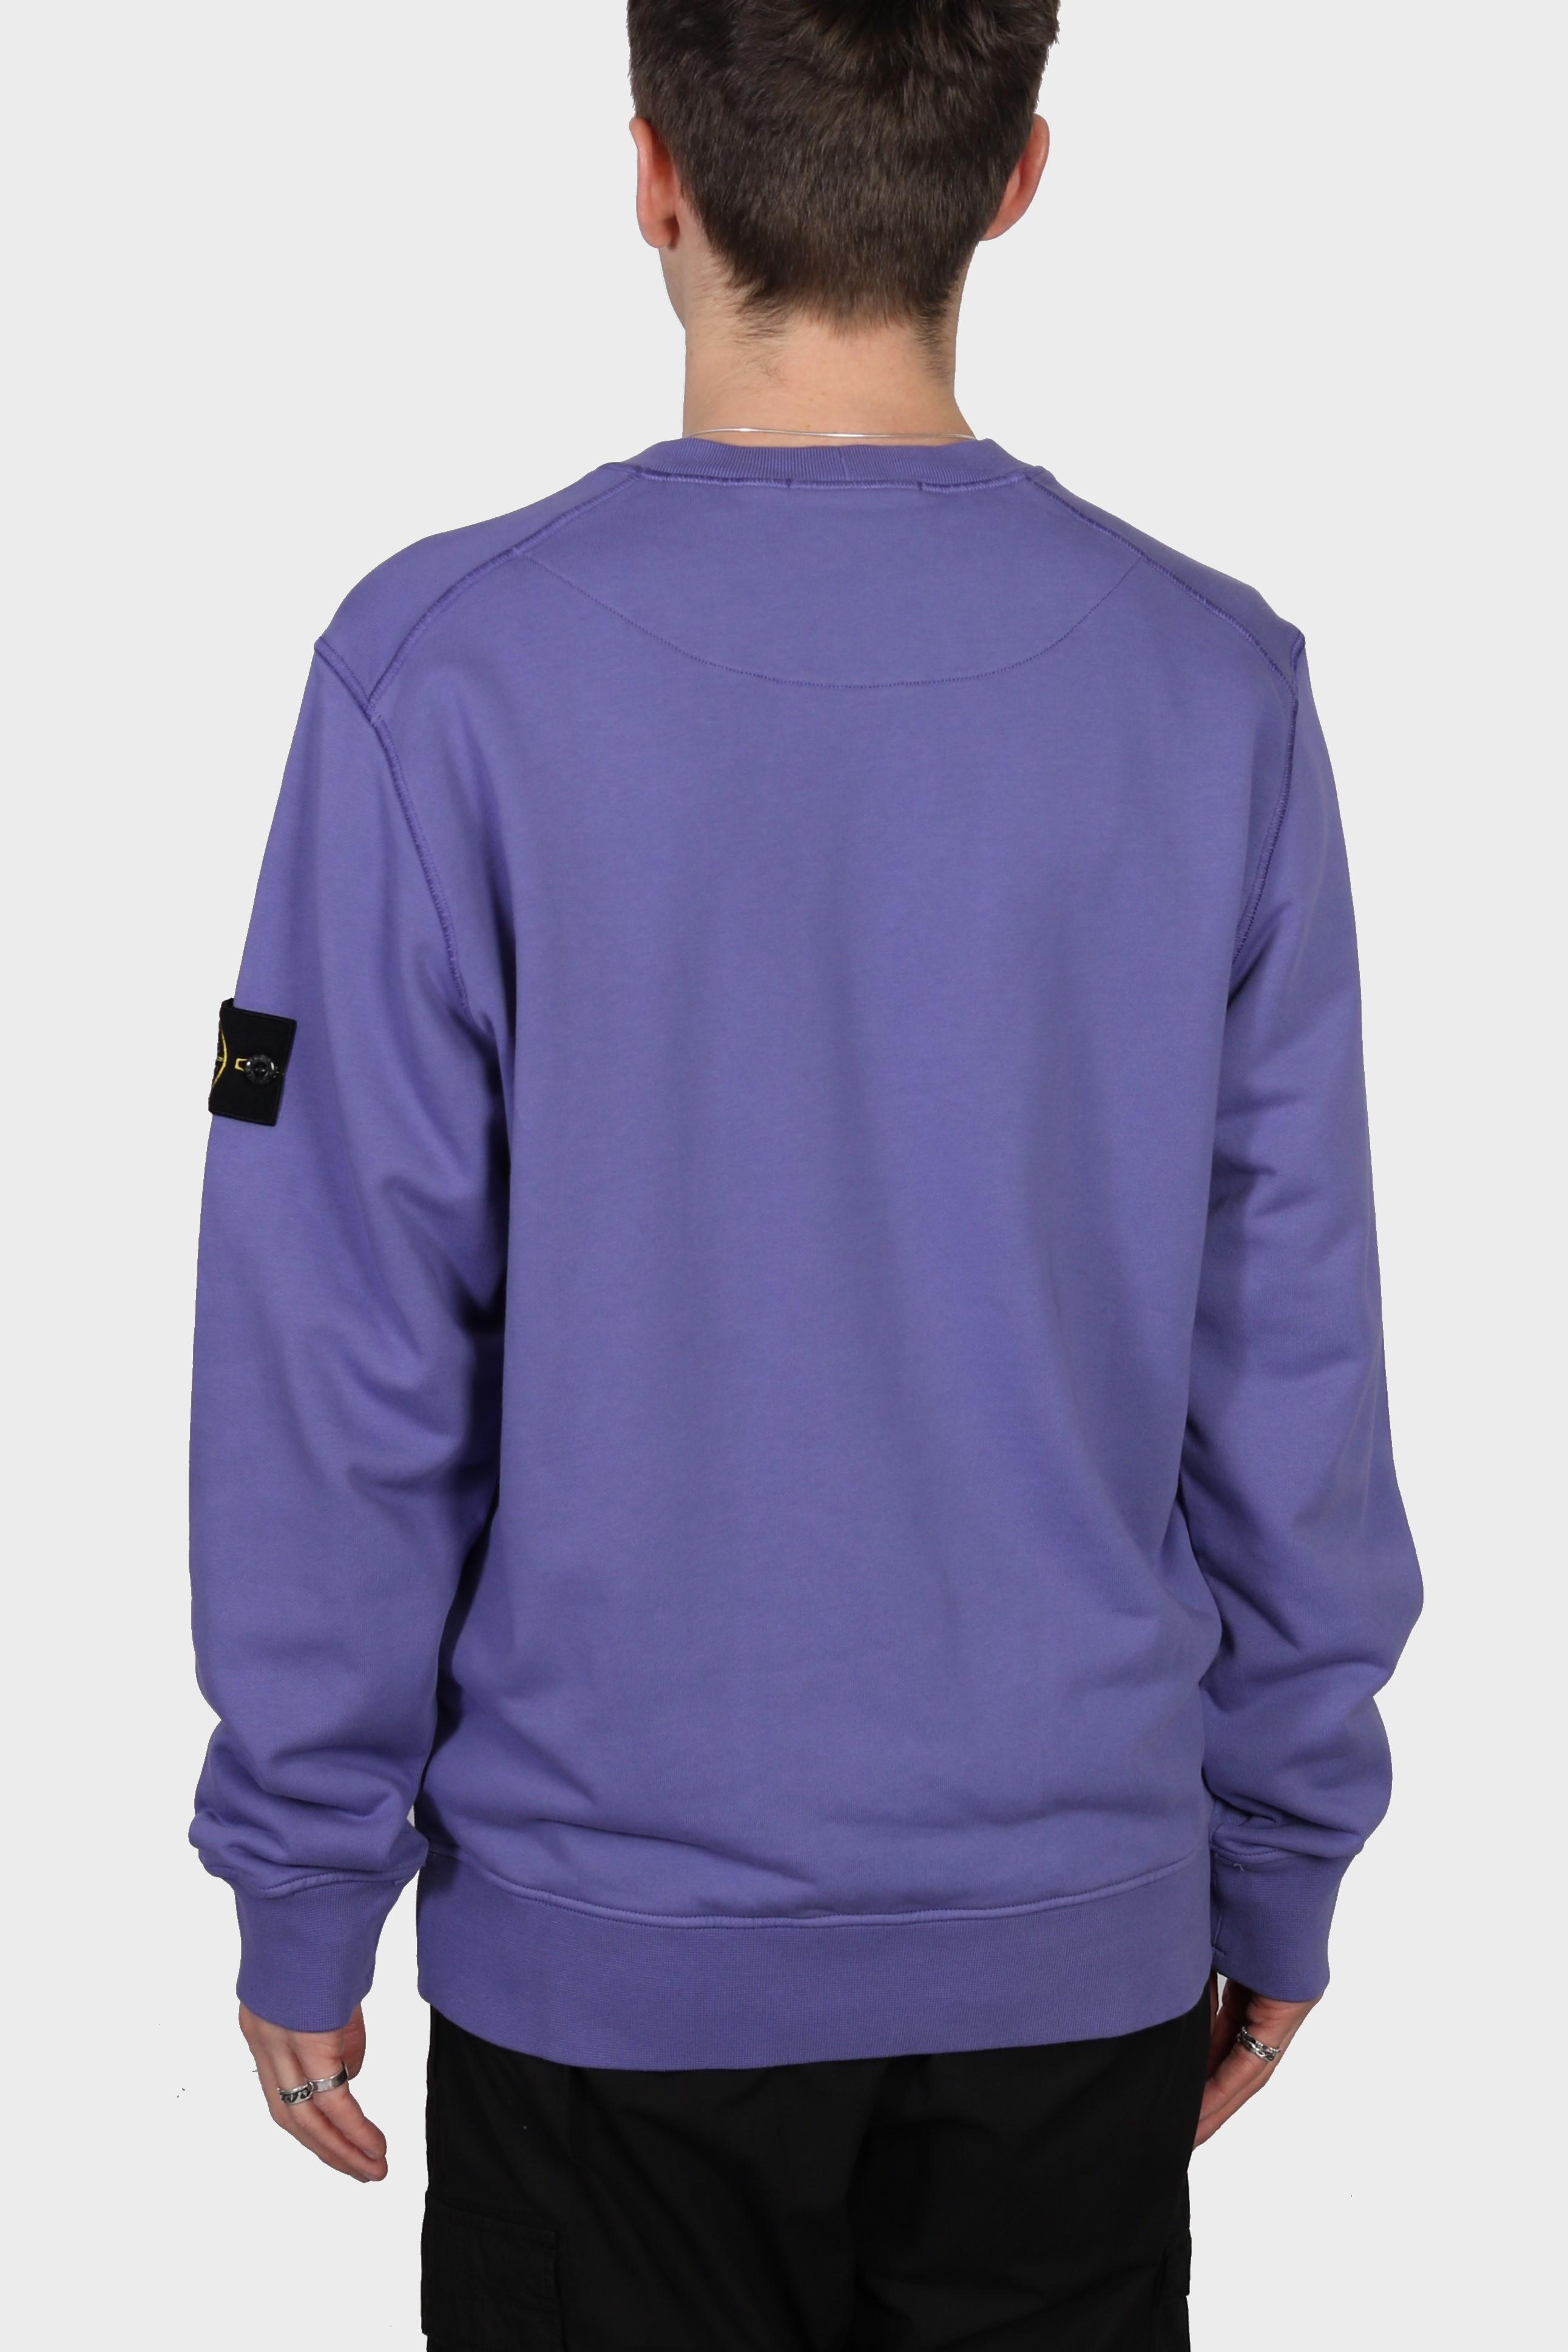 STONE ISLAND Sweatshirt in Lilac L